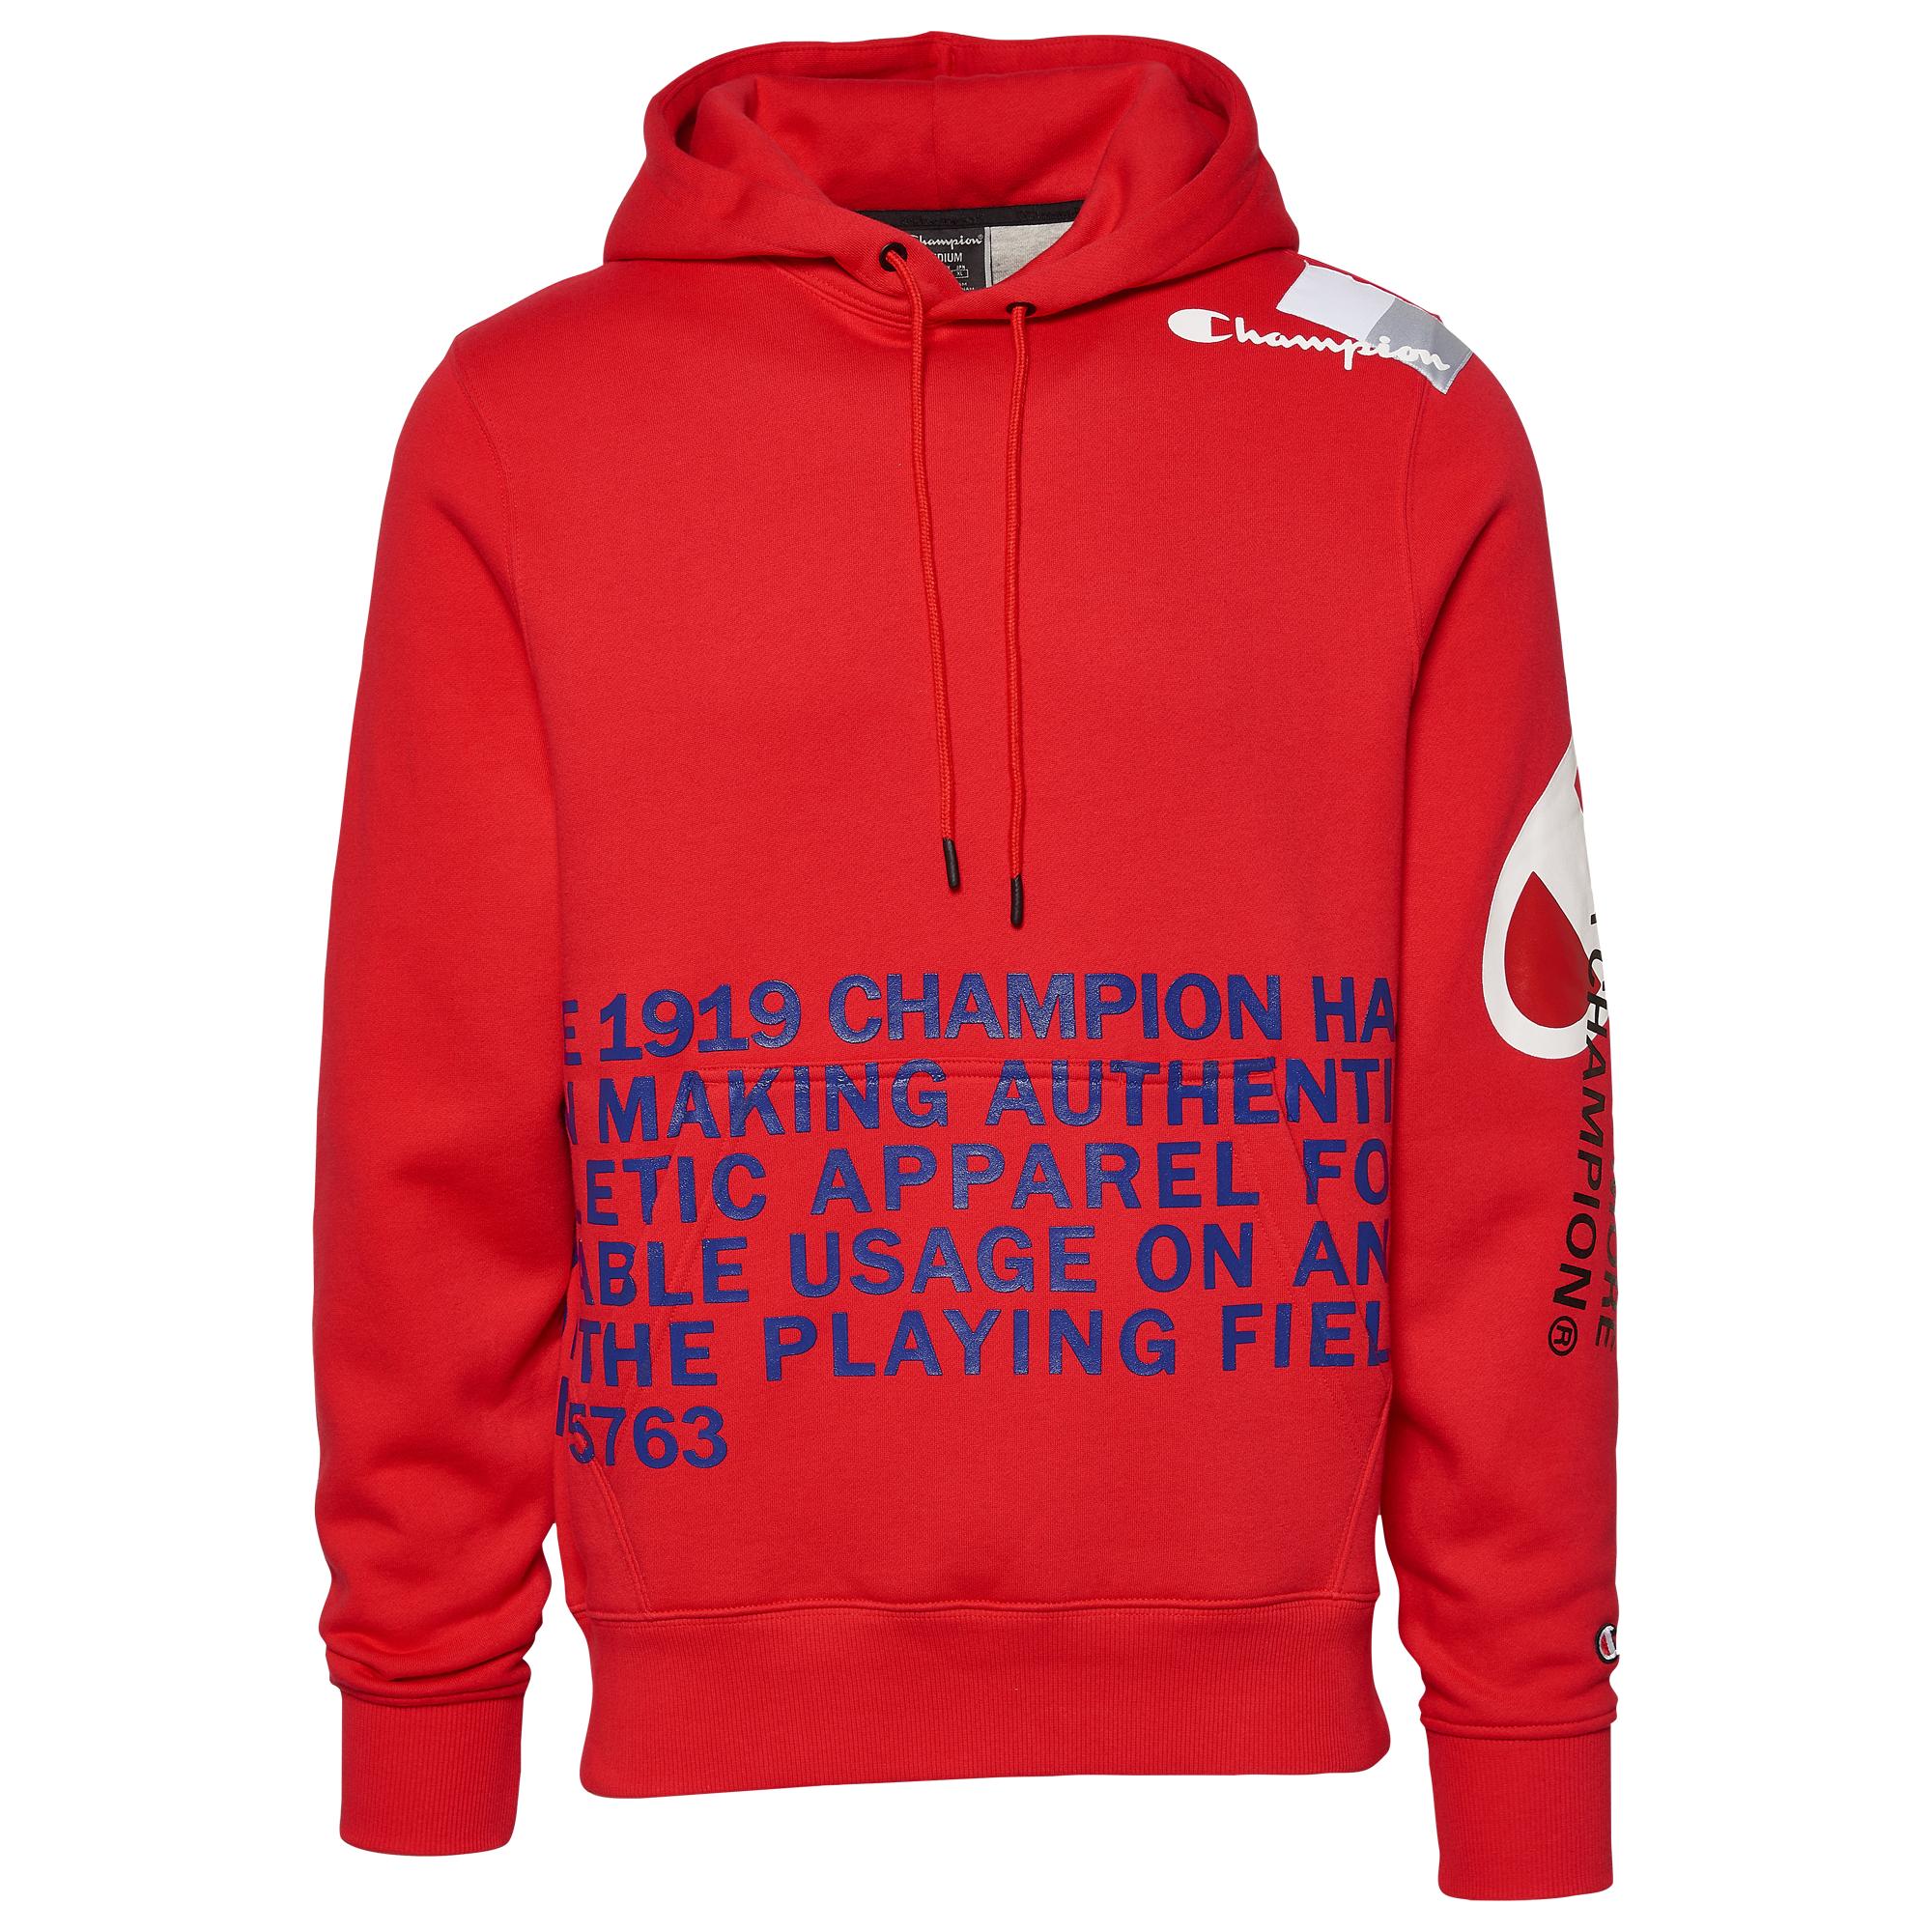 a champion hoodie